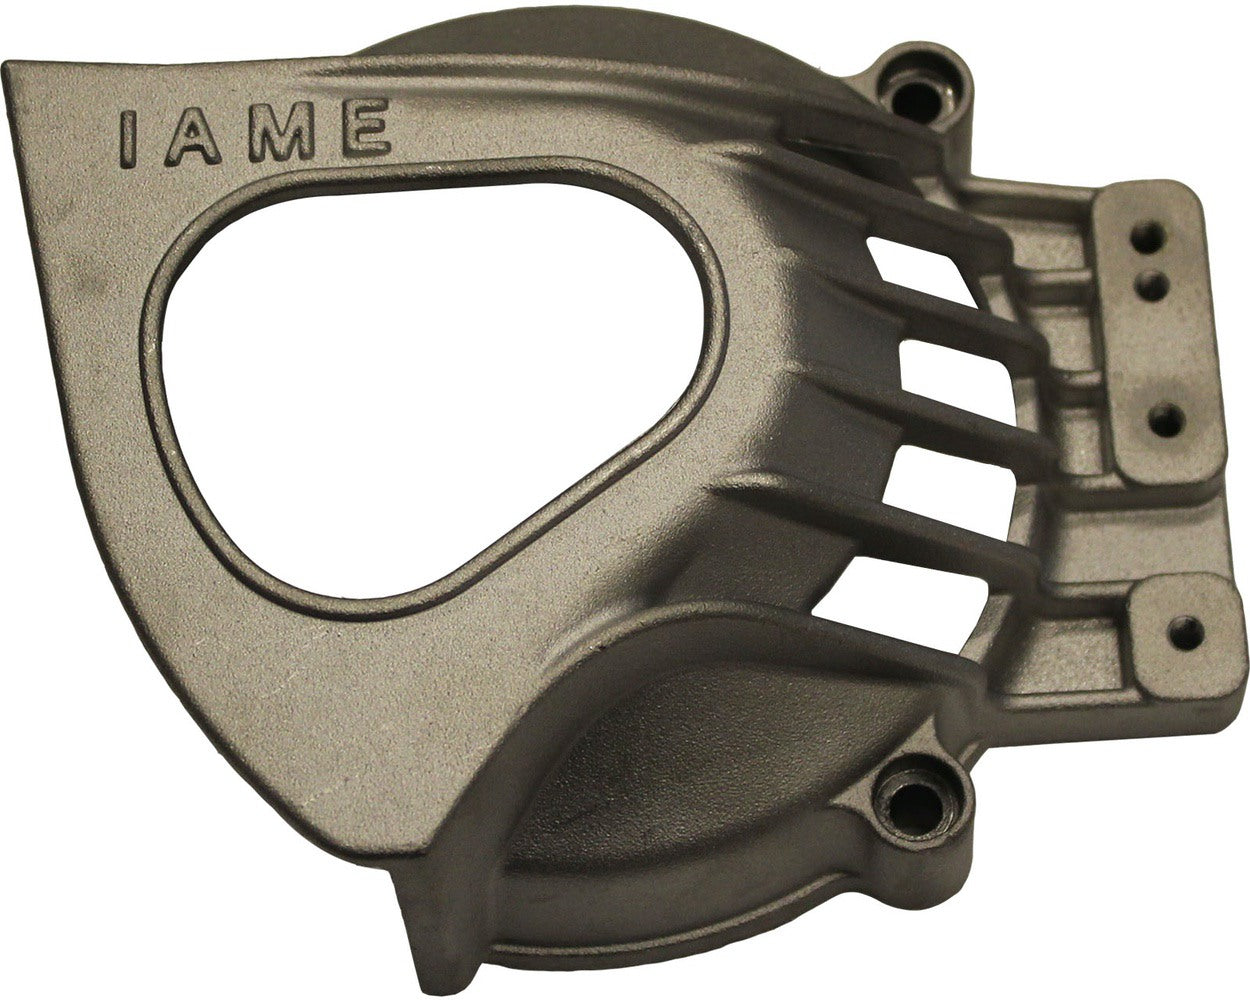 Iame Bambino, Water Swift & Gazelle Engine Clutch Guard Genuine